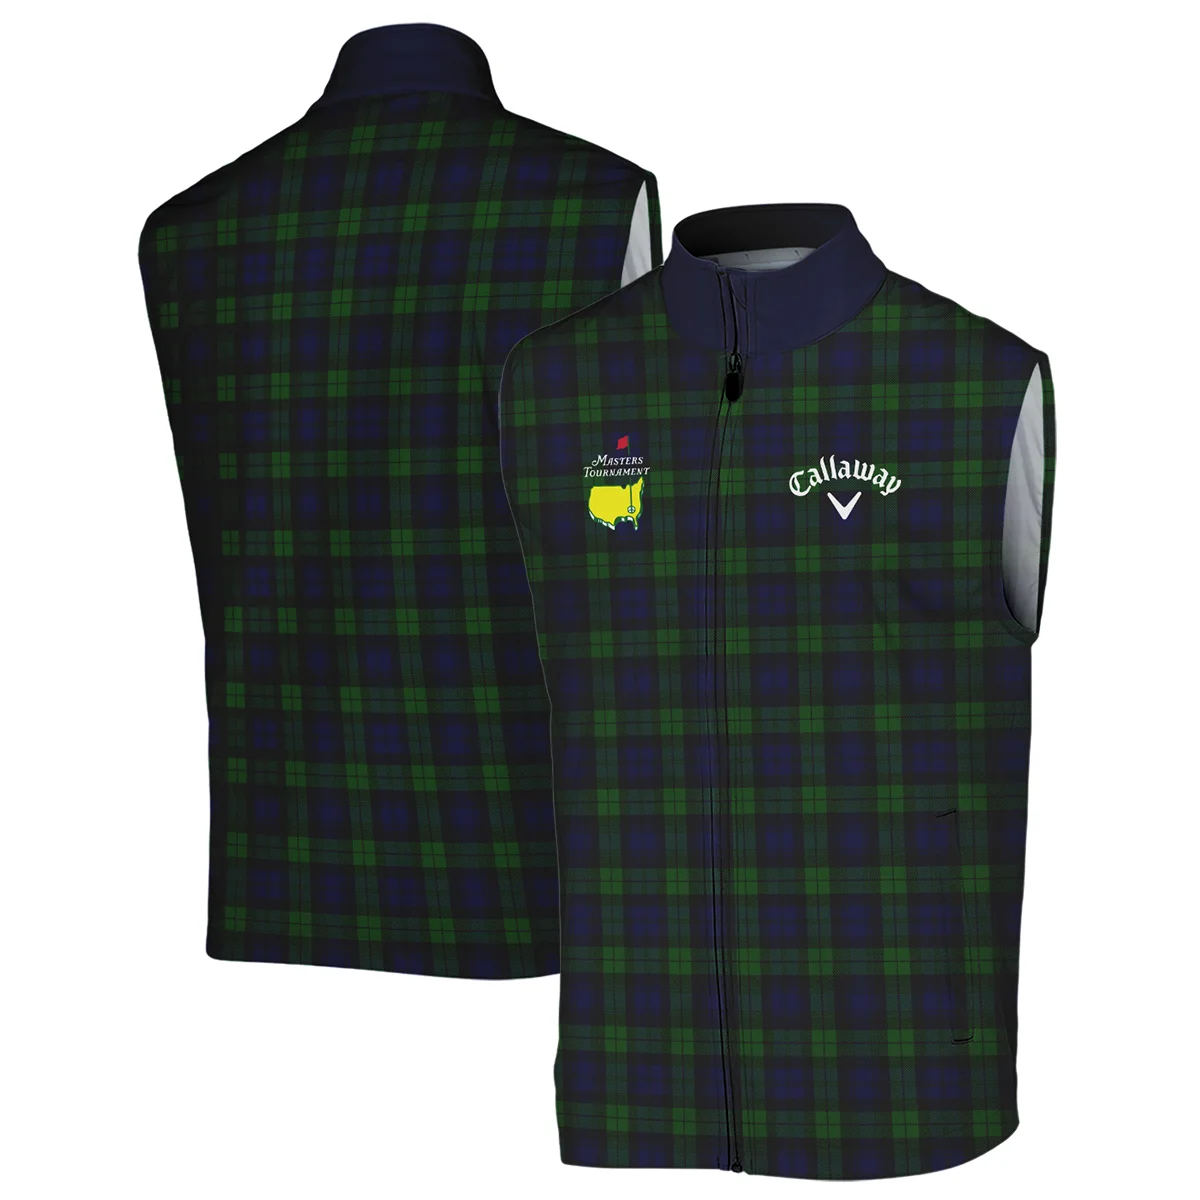 Masters Tournament Callaway Golf Unisex Sweatshirt Sports Green Purple Black Watch Tartan Plaid All Over Print Sweatshirt